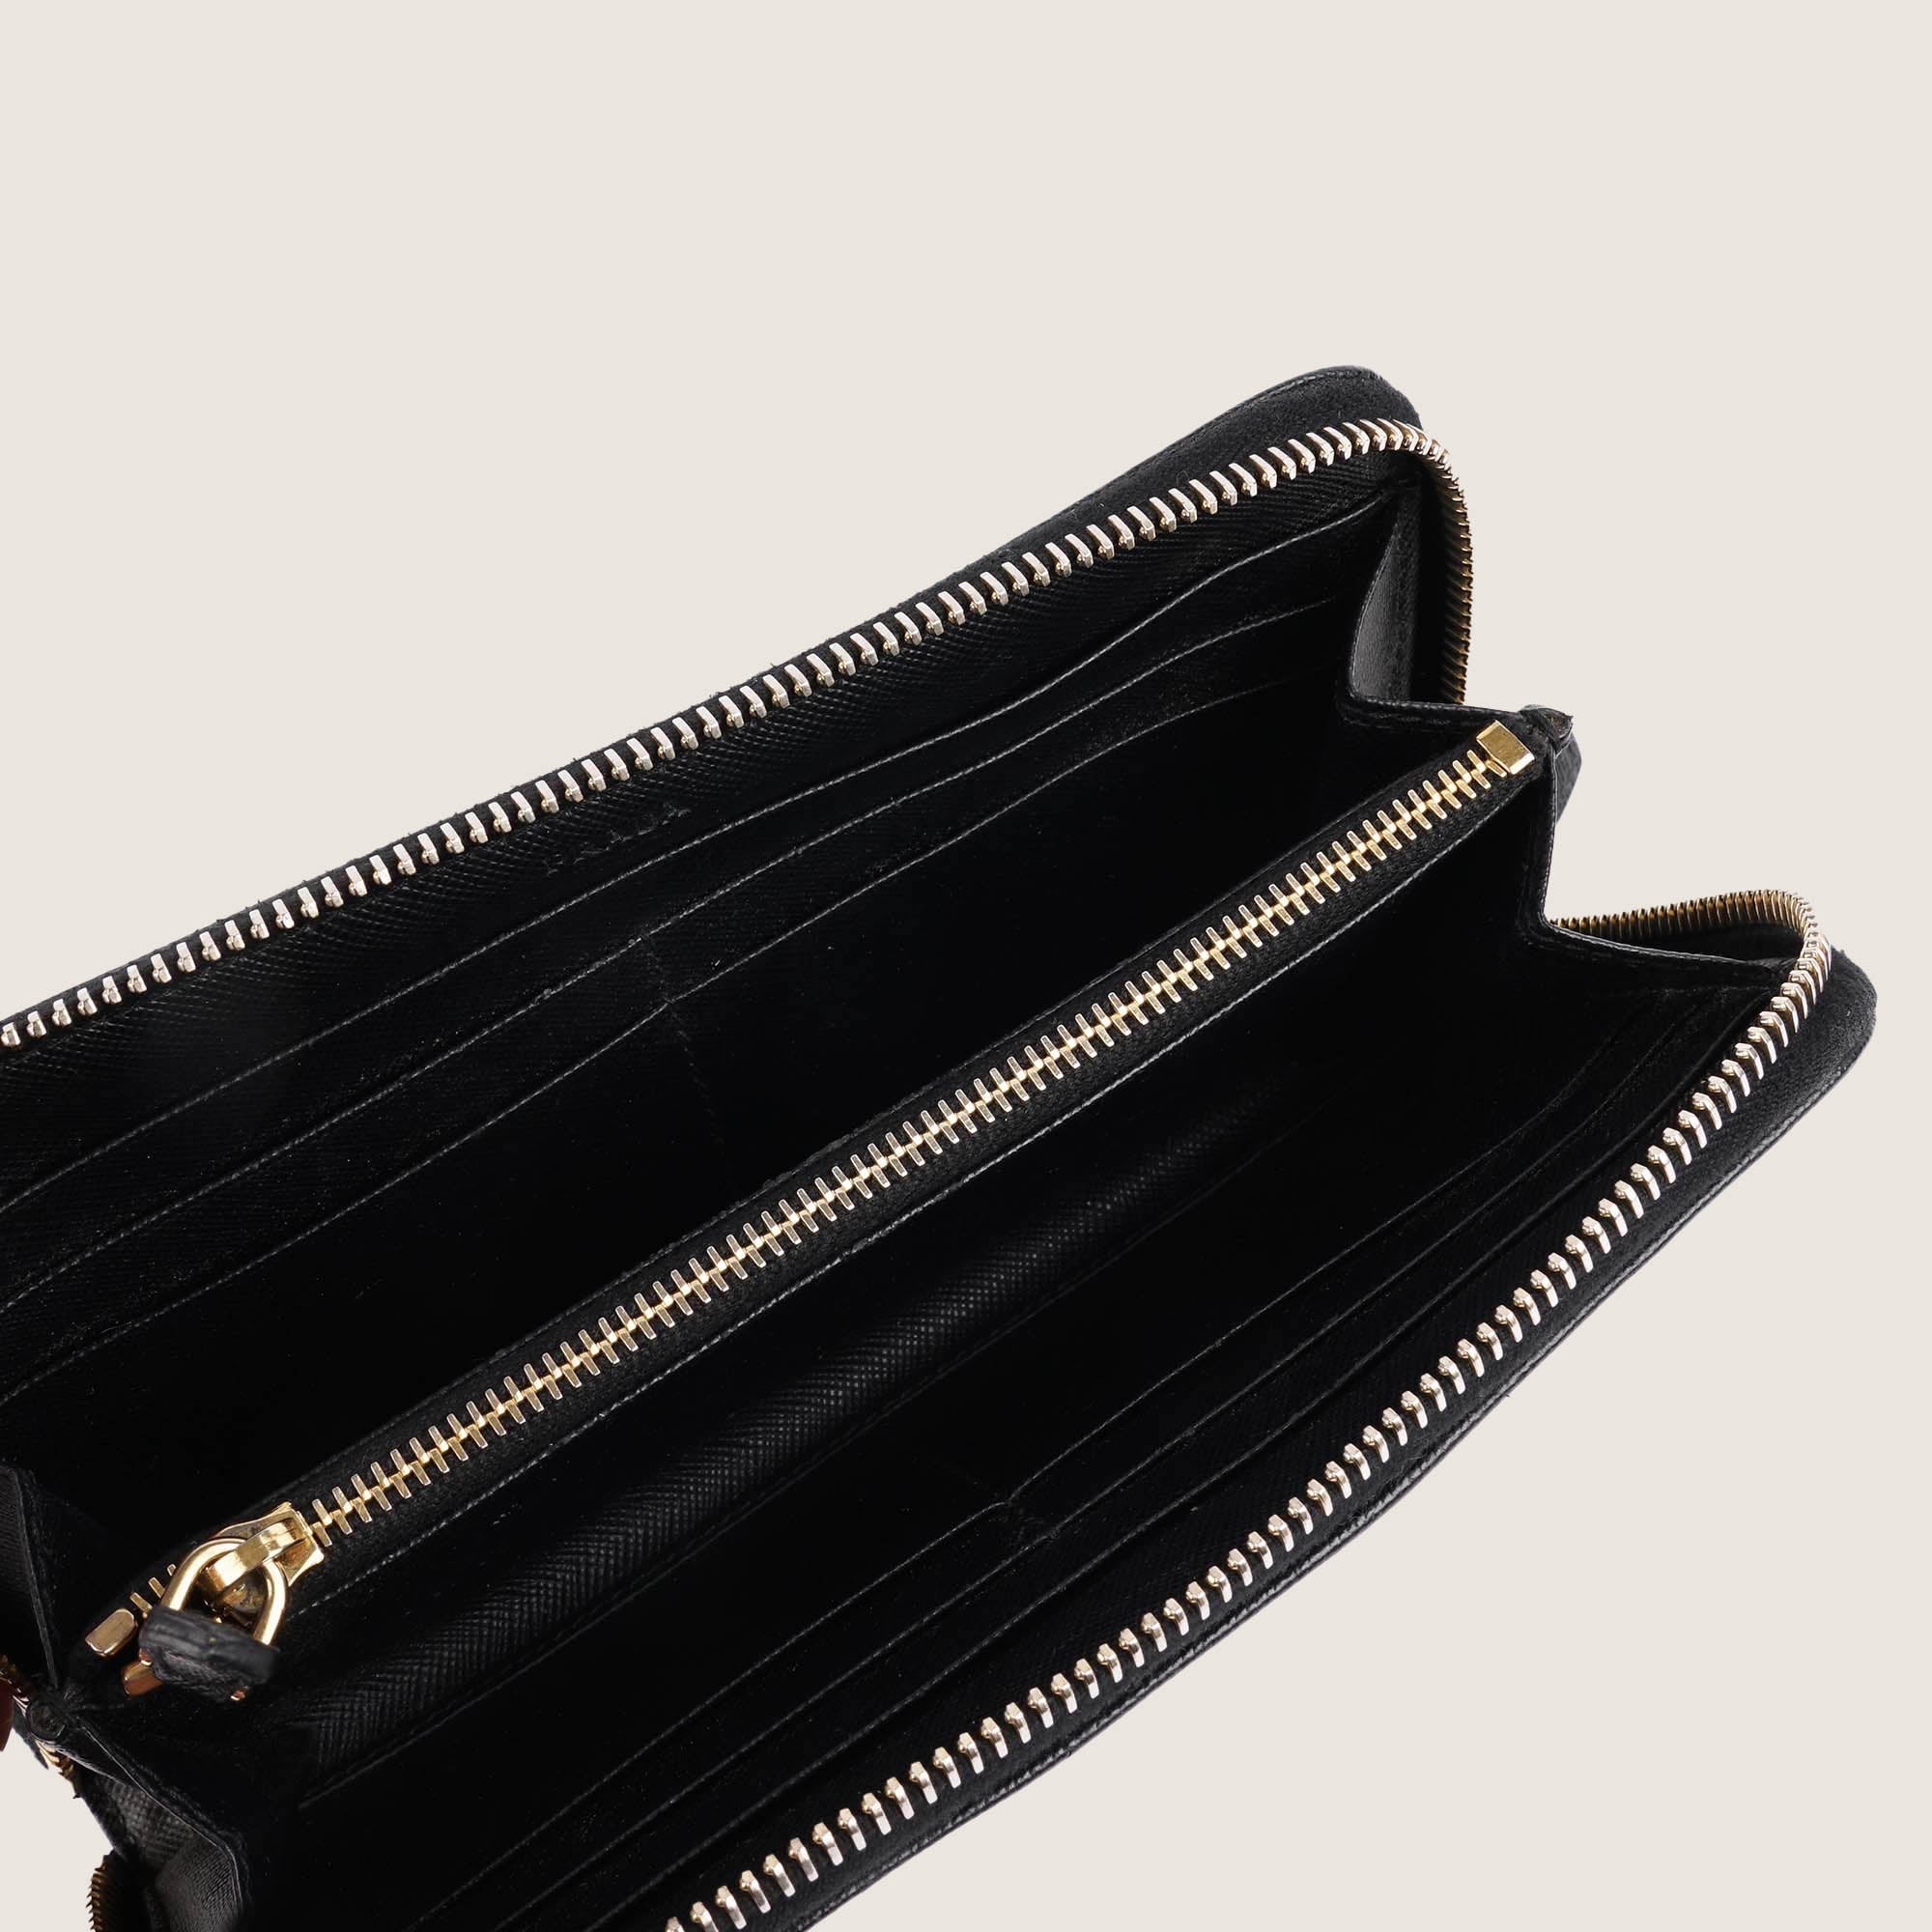 Large Saffiano Wallet - PRADA - Affordable Luxury image